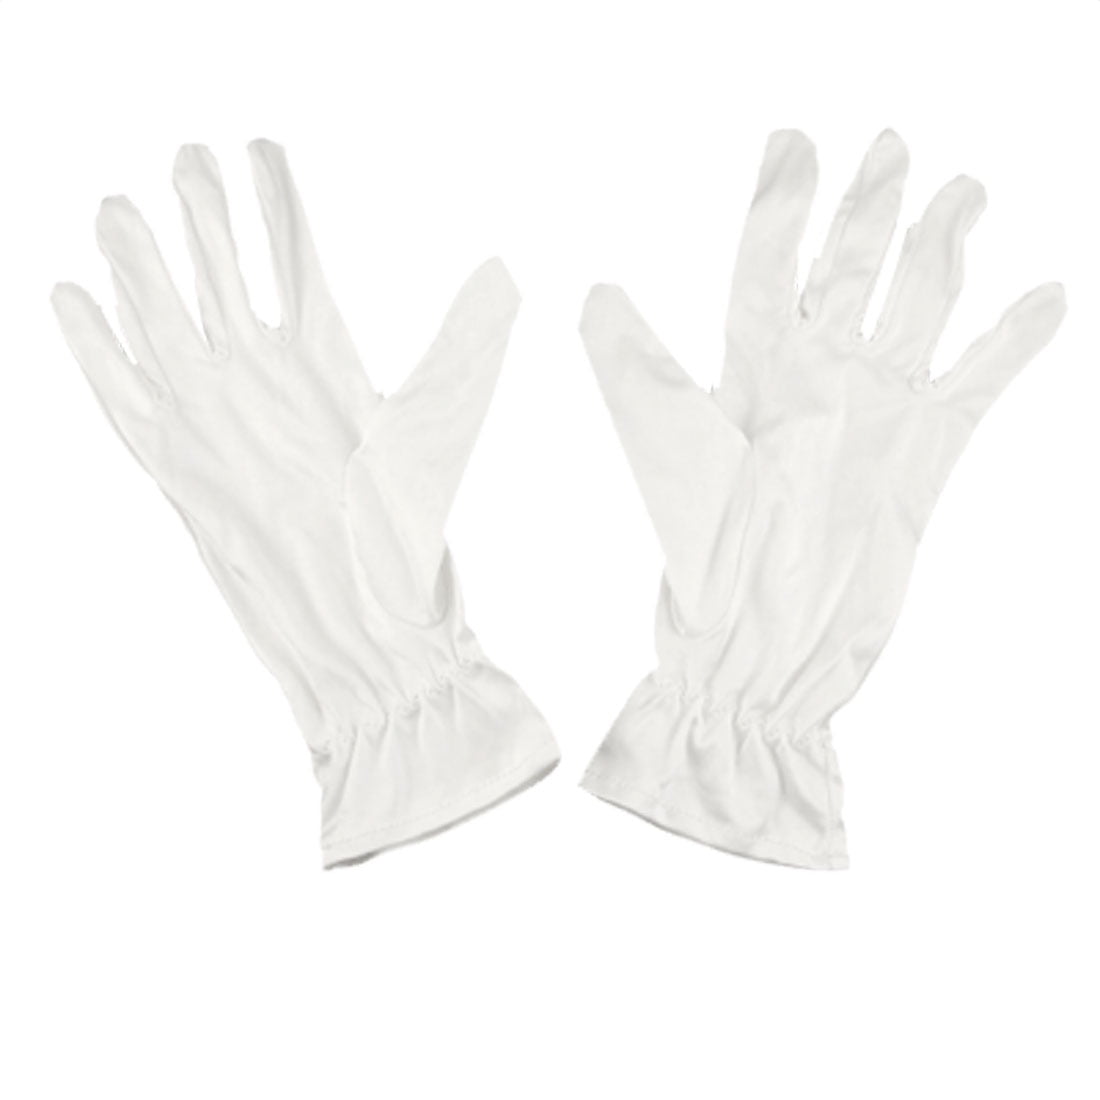 Size XS Jewelry Watch Protective Wht Microfiber Gloves - Walmart.com ...